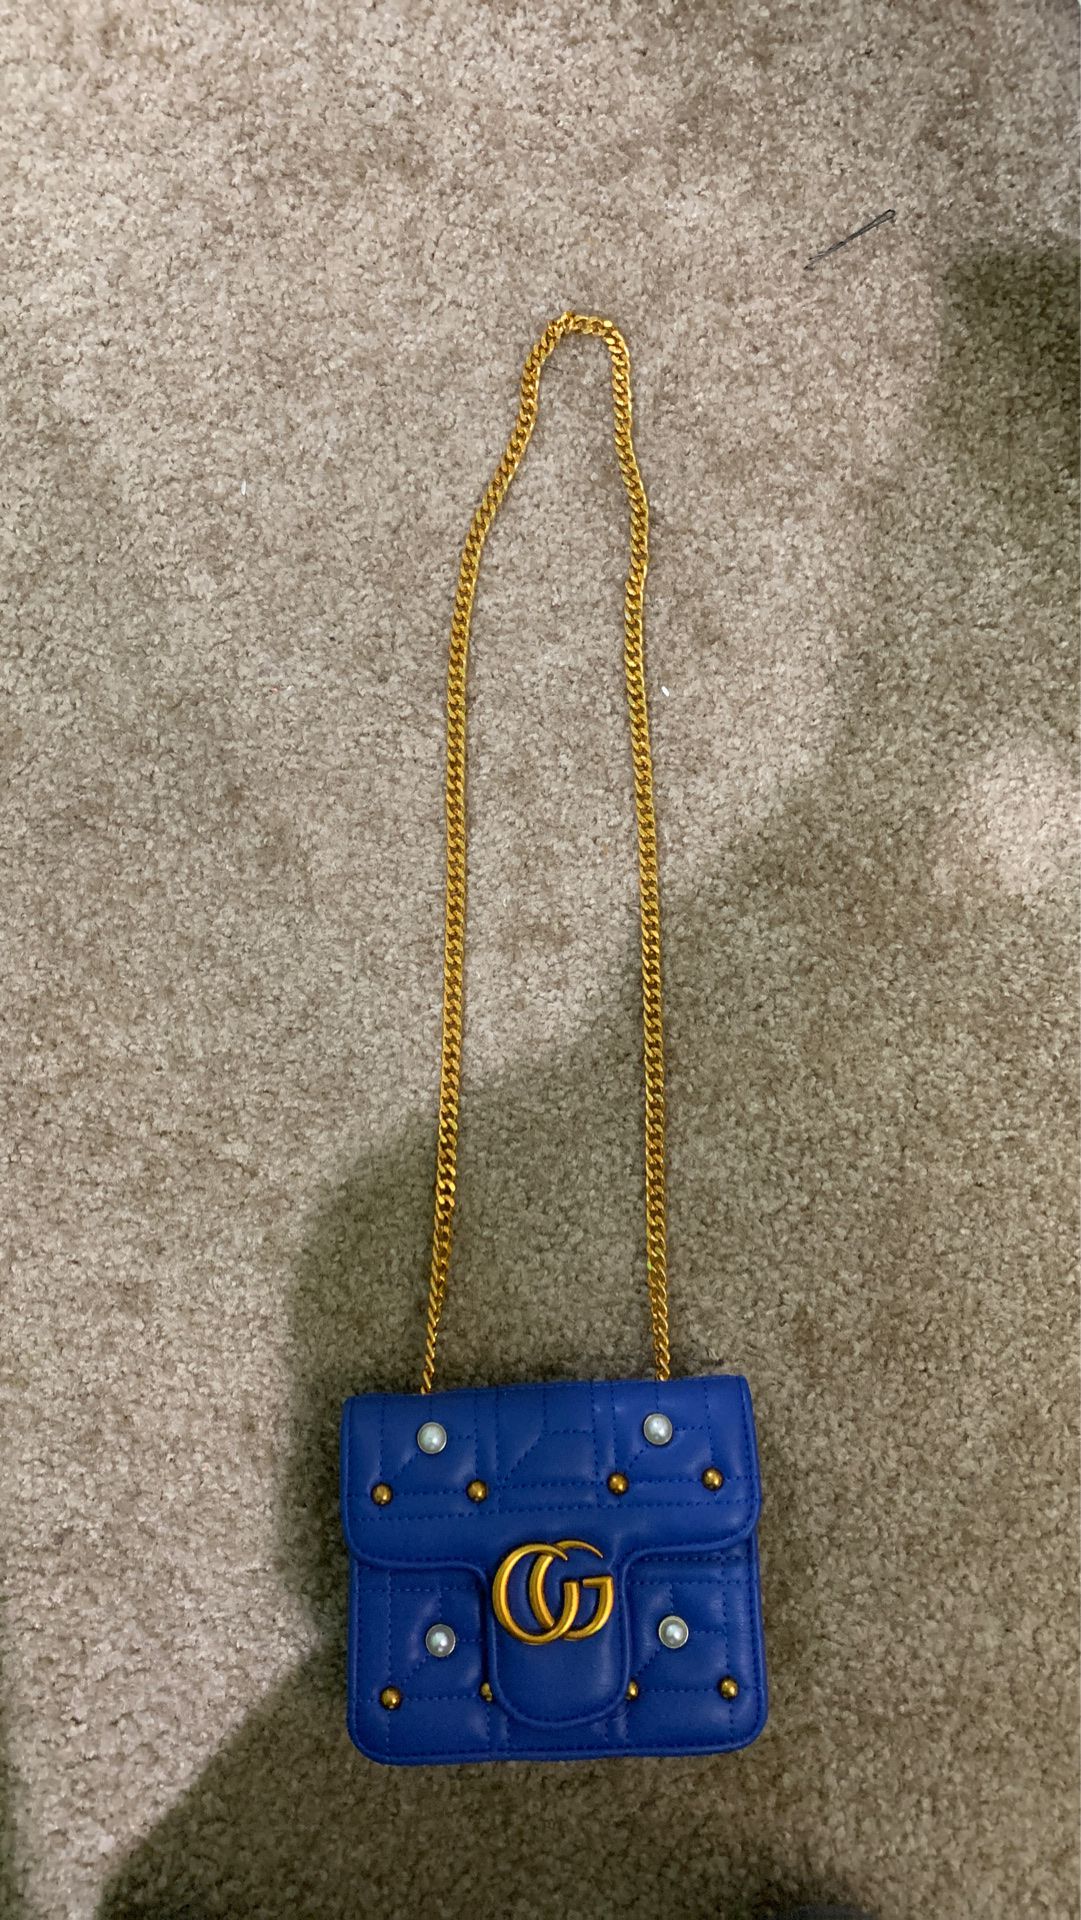 Gucci small handbag (tags off but never used)